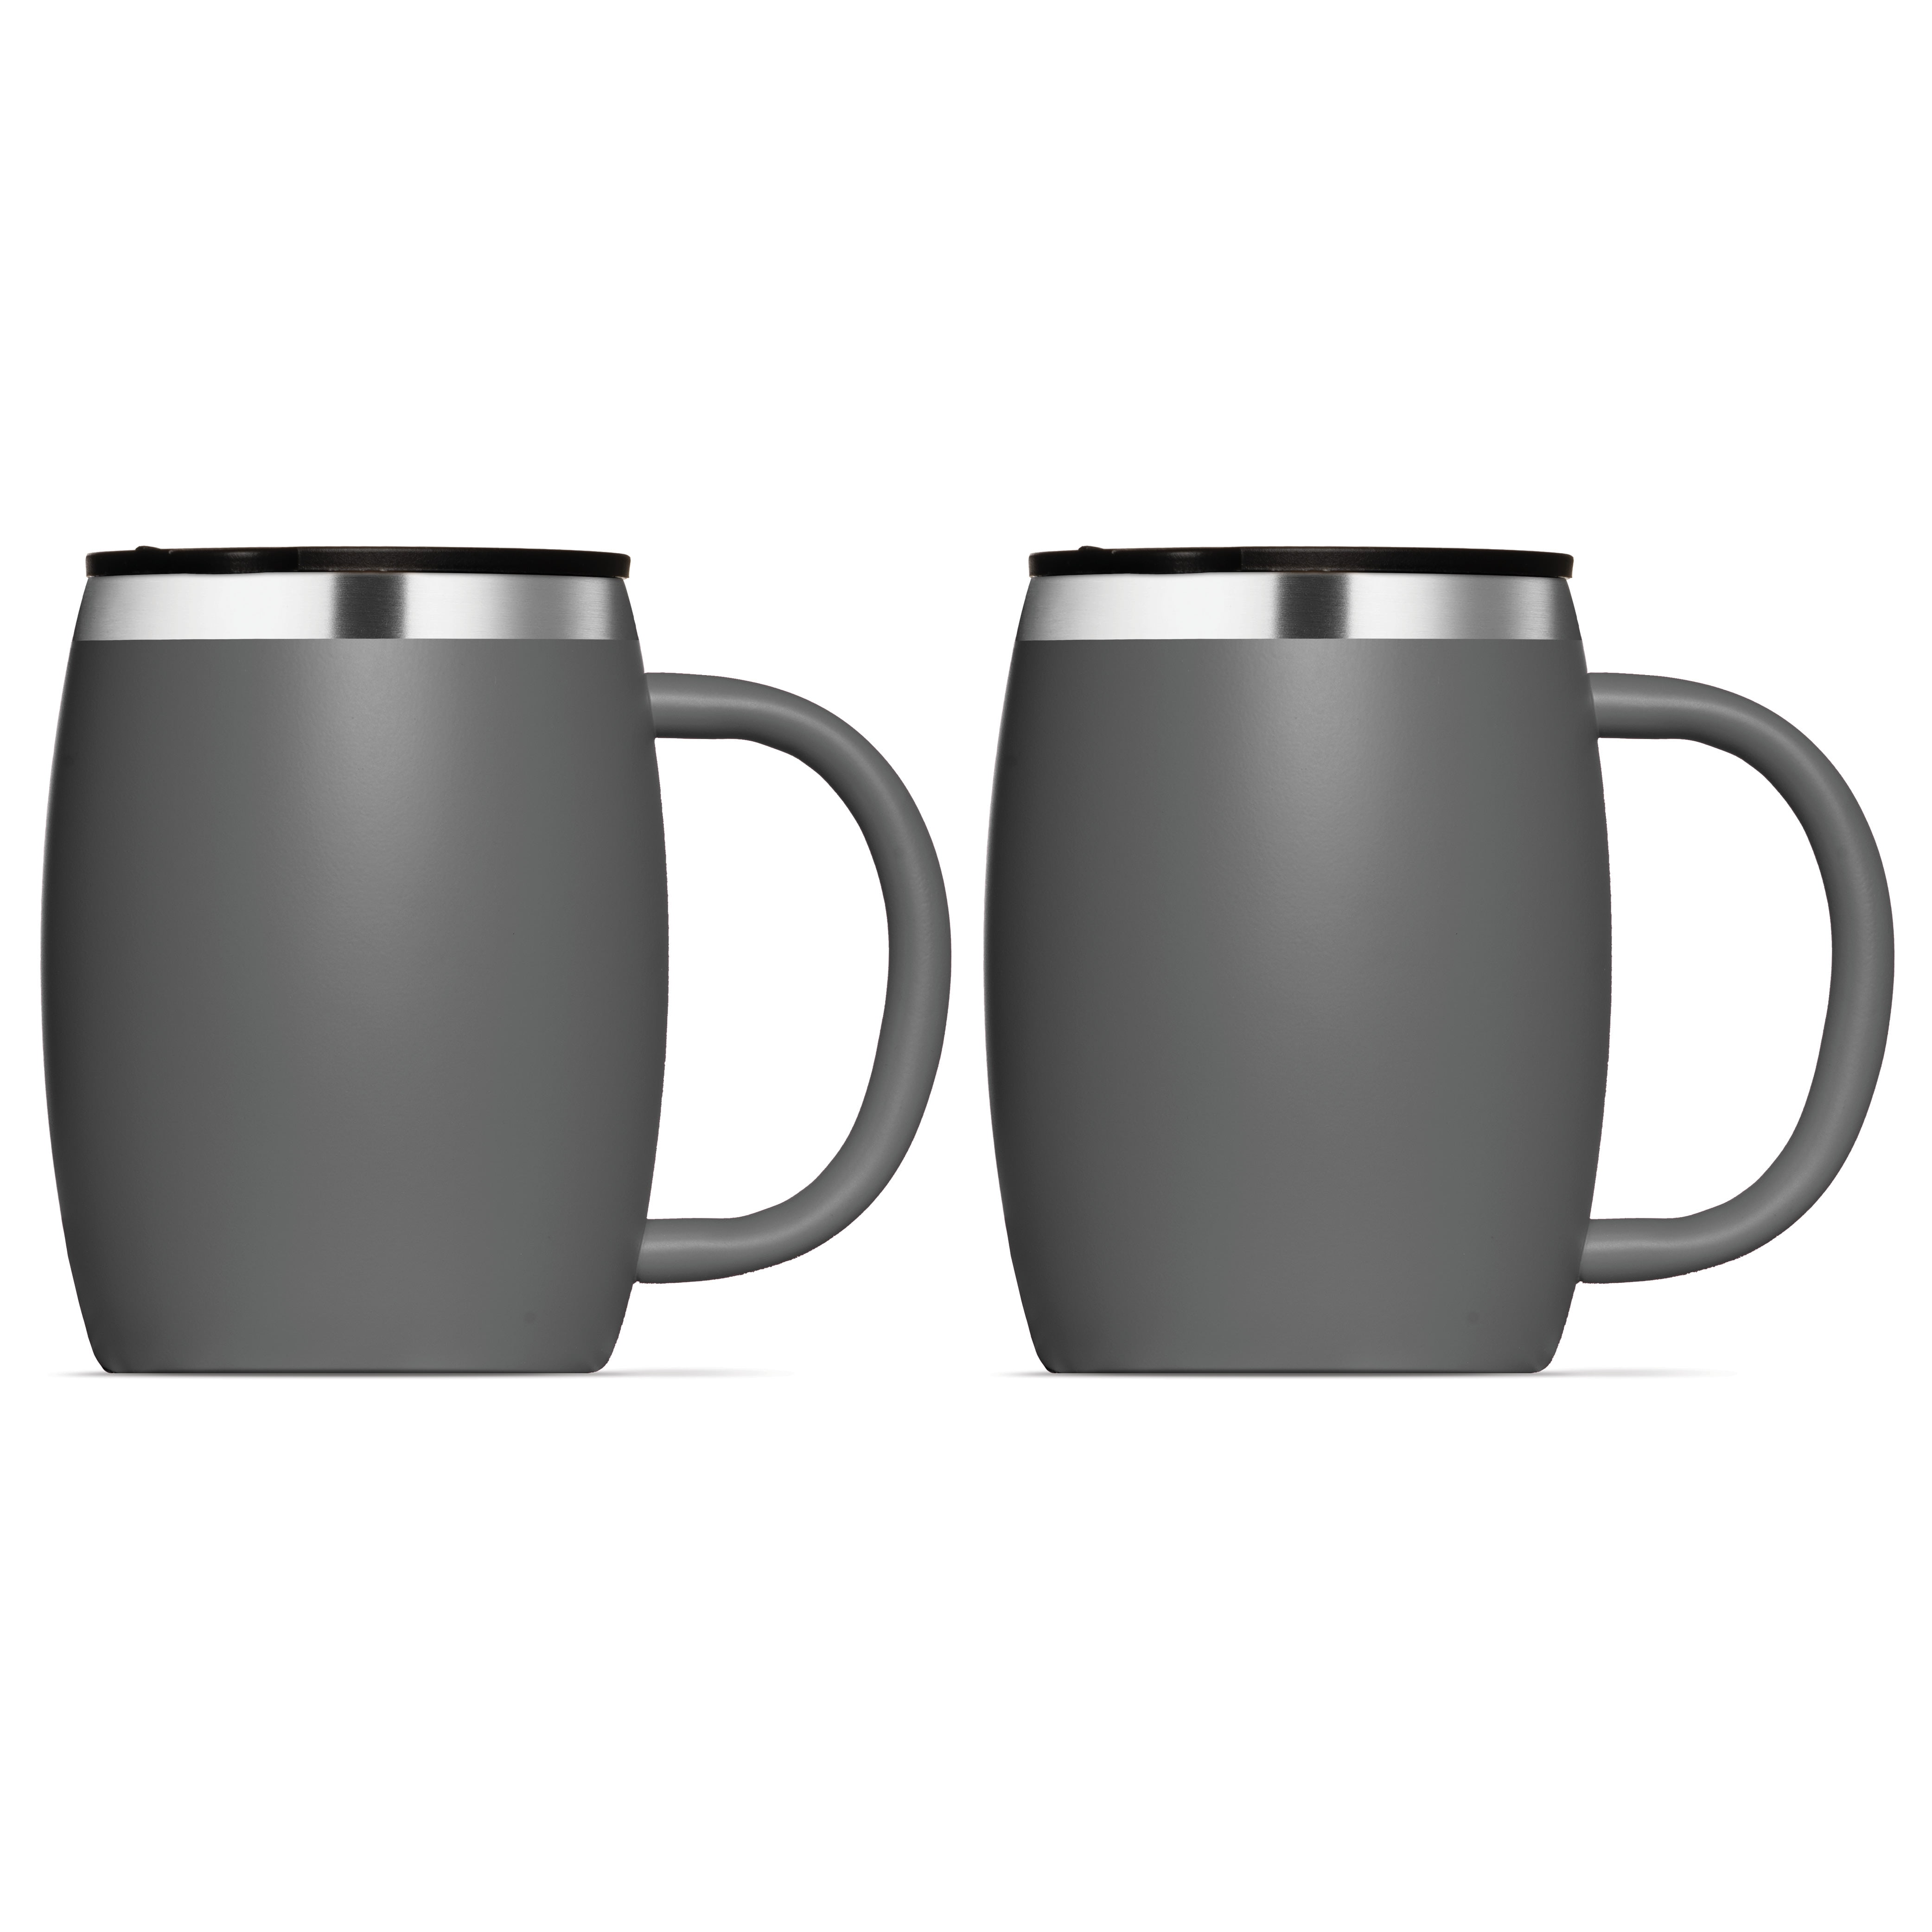 Stainless Steel Coffee Mug with Folding Handle, Camping Mug Small Mugs  Double Wall Insulated Mug Metal Teacup for Tea Camp Coffee